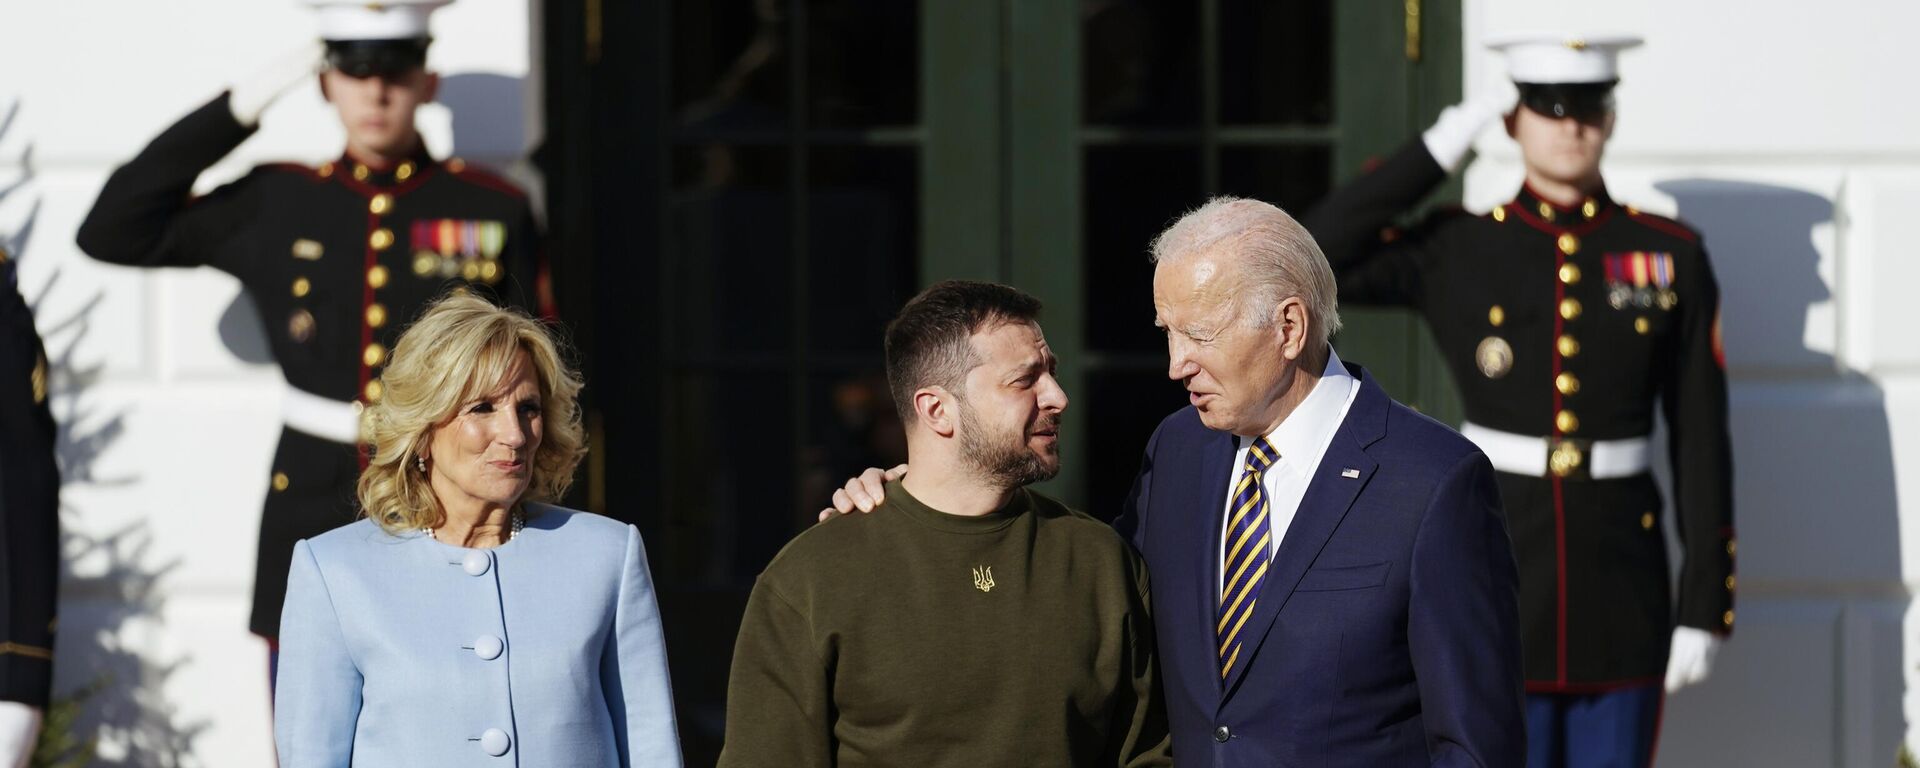 Volodímir Zelenski, presidente de Ucrania, y Joe Biden, presidente de EEUU, acompañado de su esposa, Jill Biden. - Sputnik Mundo, 1920, 21.12.2022